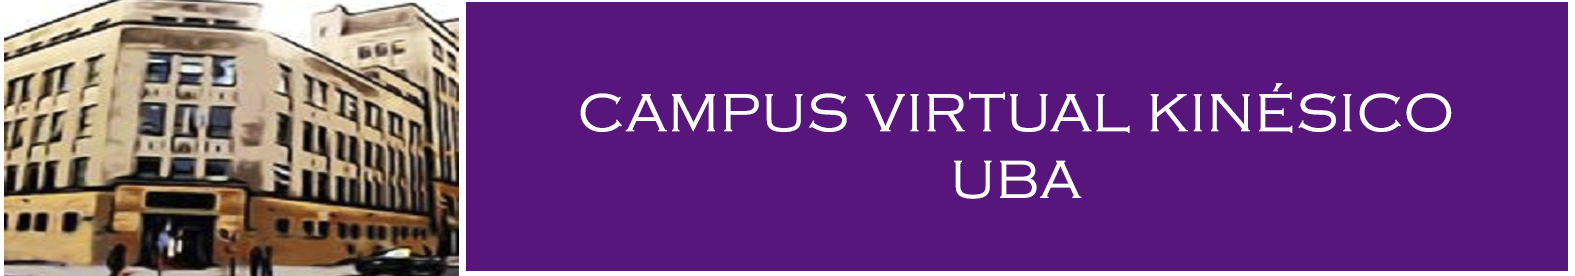 Campus Virtual Kinésico - UBA